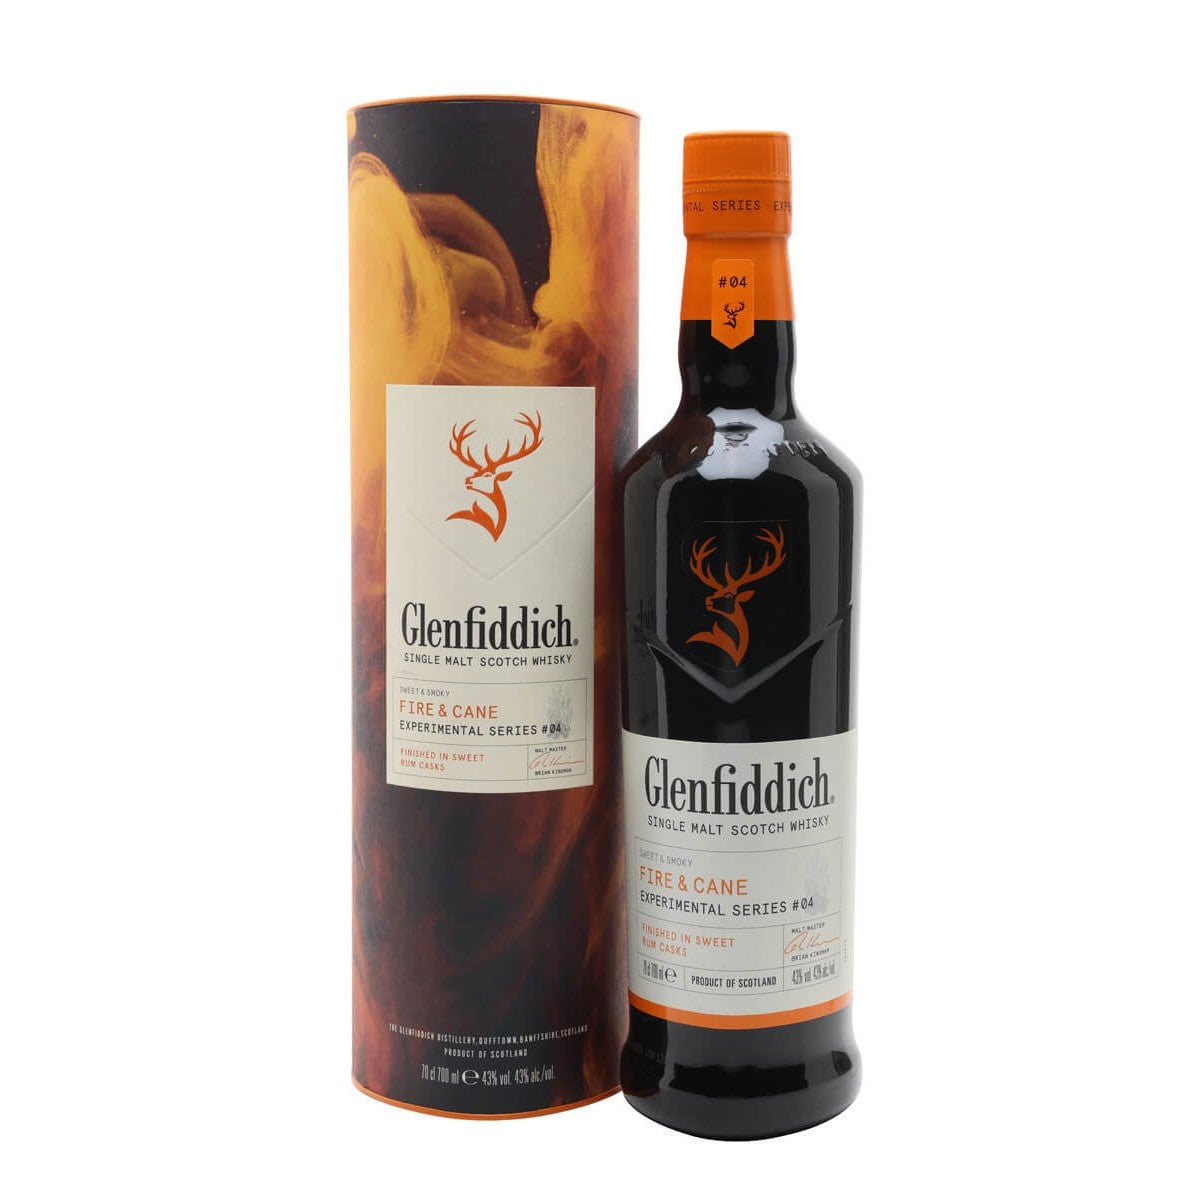 Glenfiddich Experiment 04 Fire & Cane Rum Cask Finish Single Malt Scotch Whisky 700ml